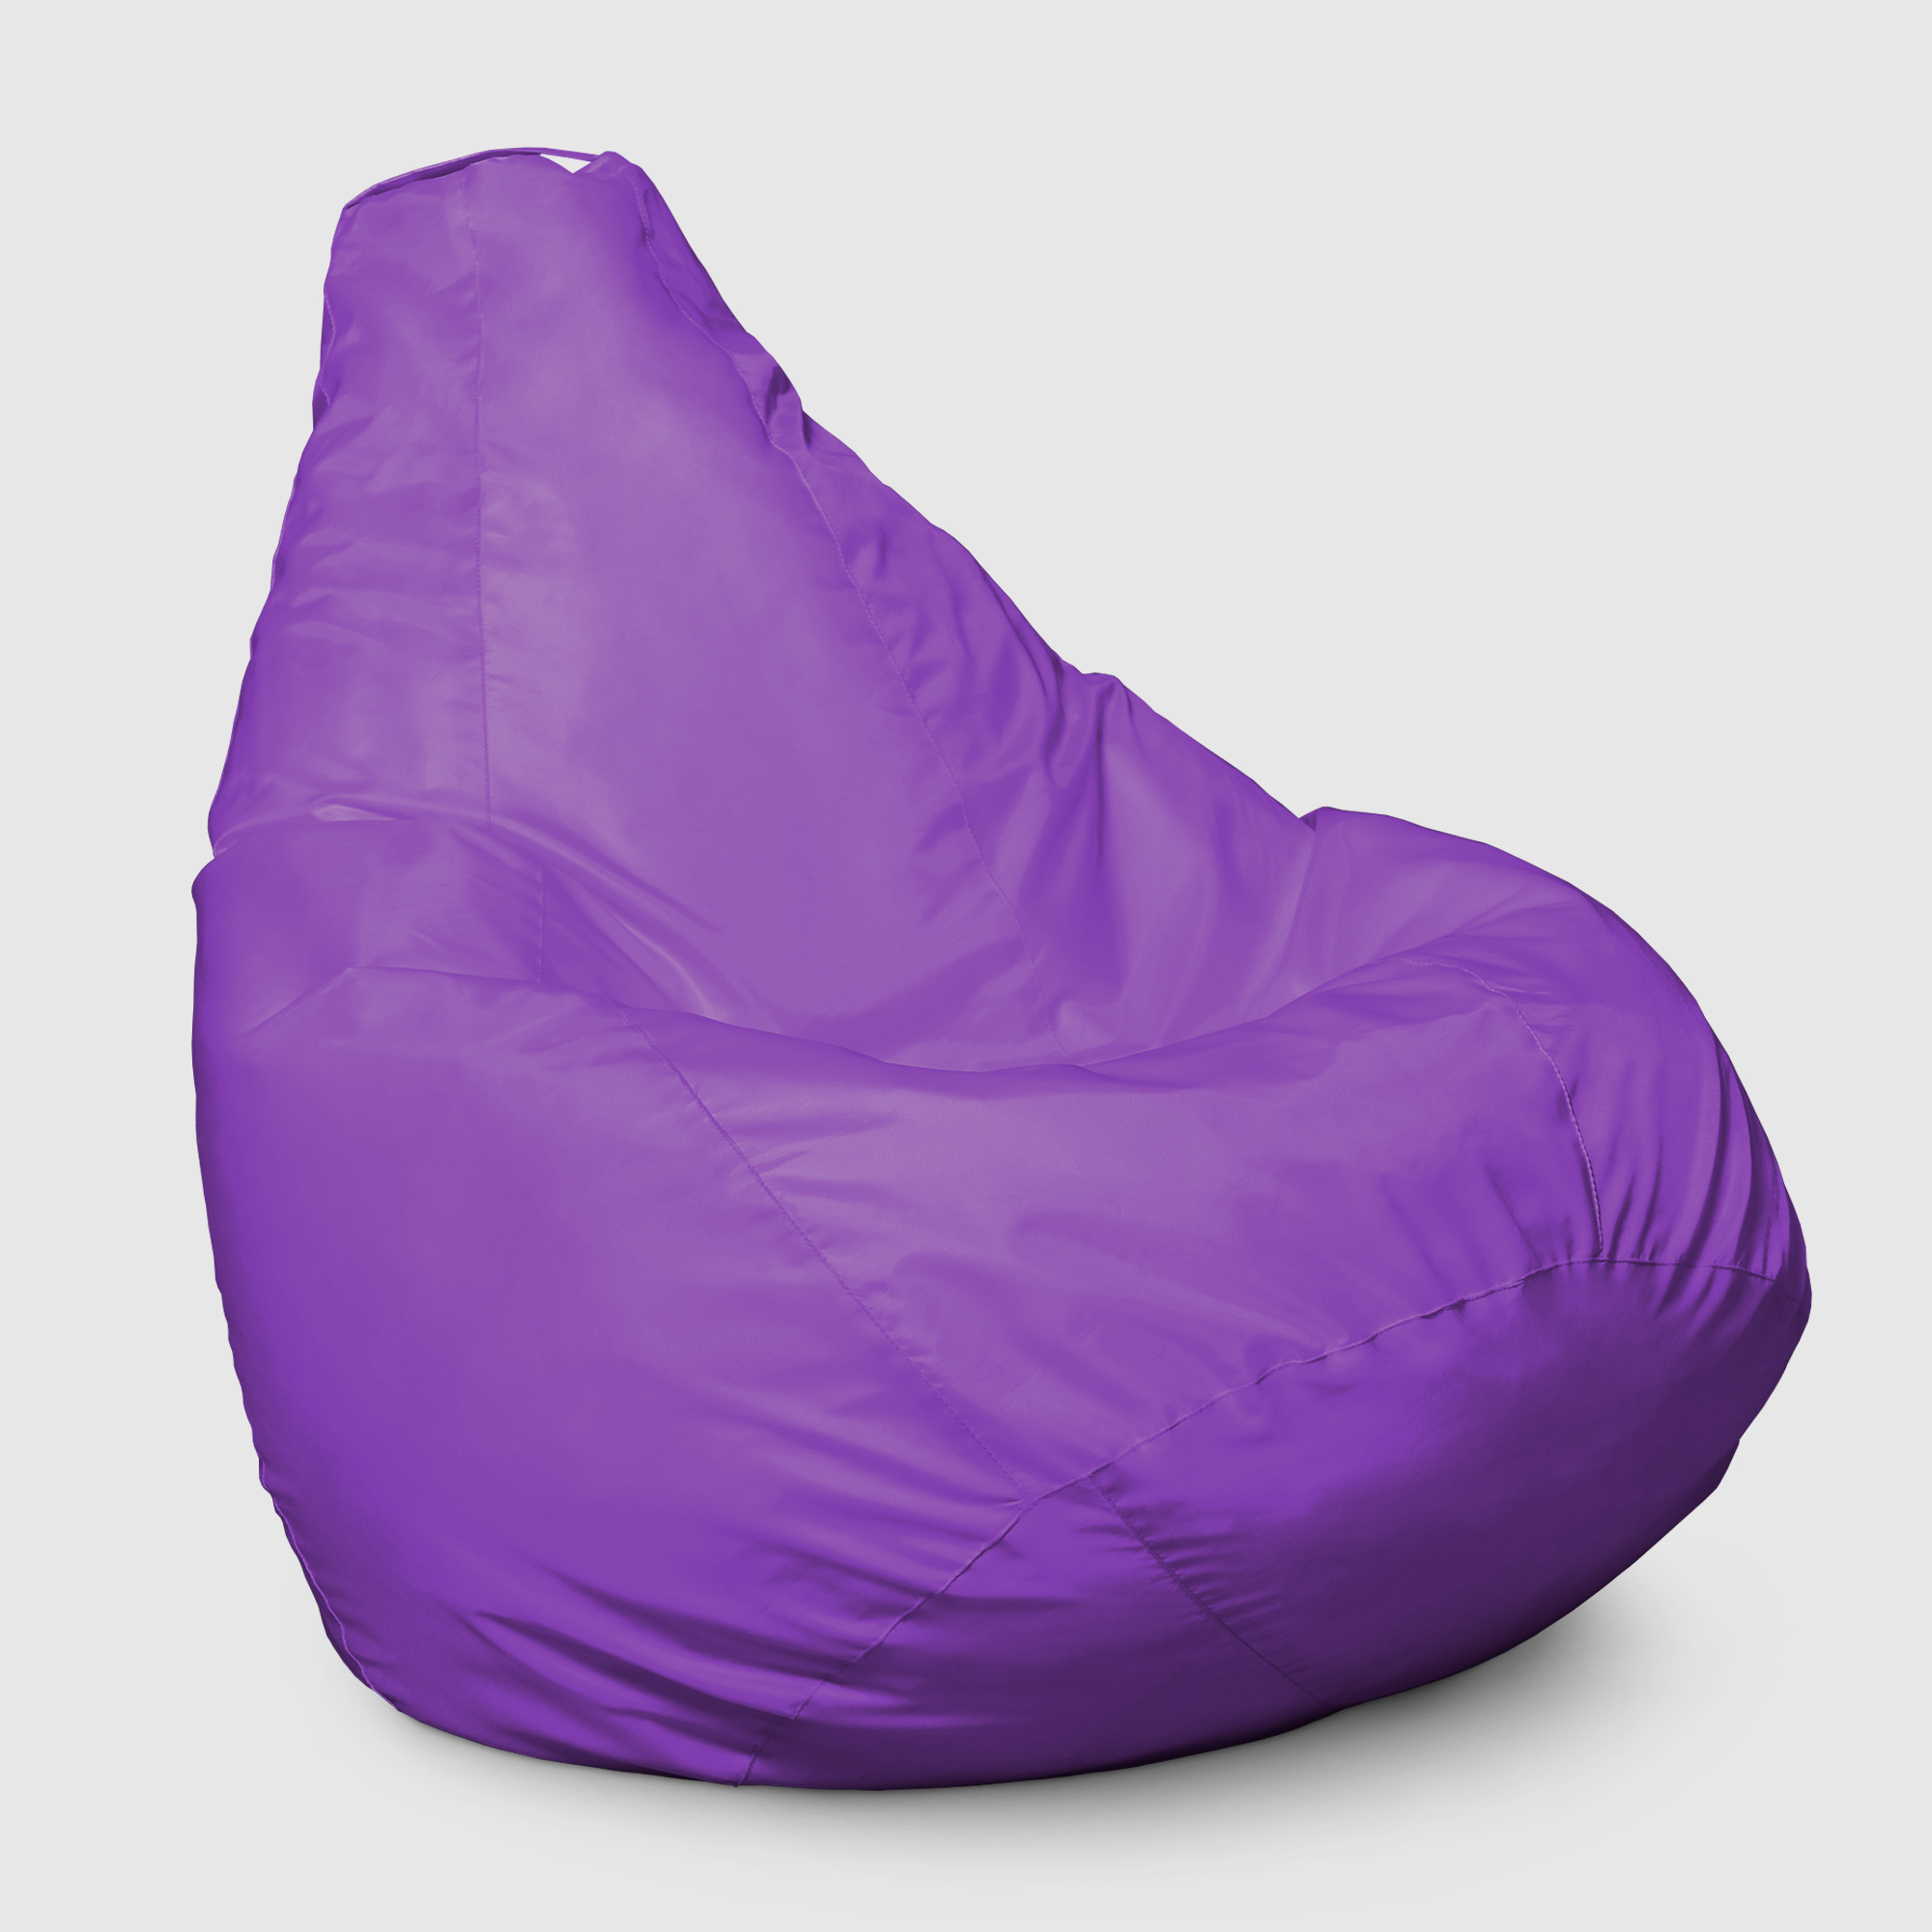 Кресло мешок Dreambag Меган xl фиолетовое 85х85х125 см кресло мешок dreambag меган xl голубое 85х85х125см